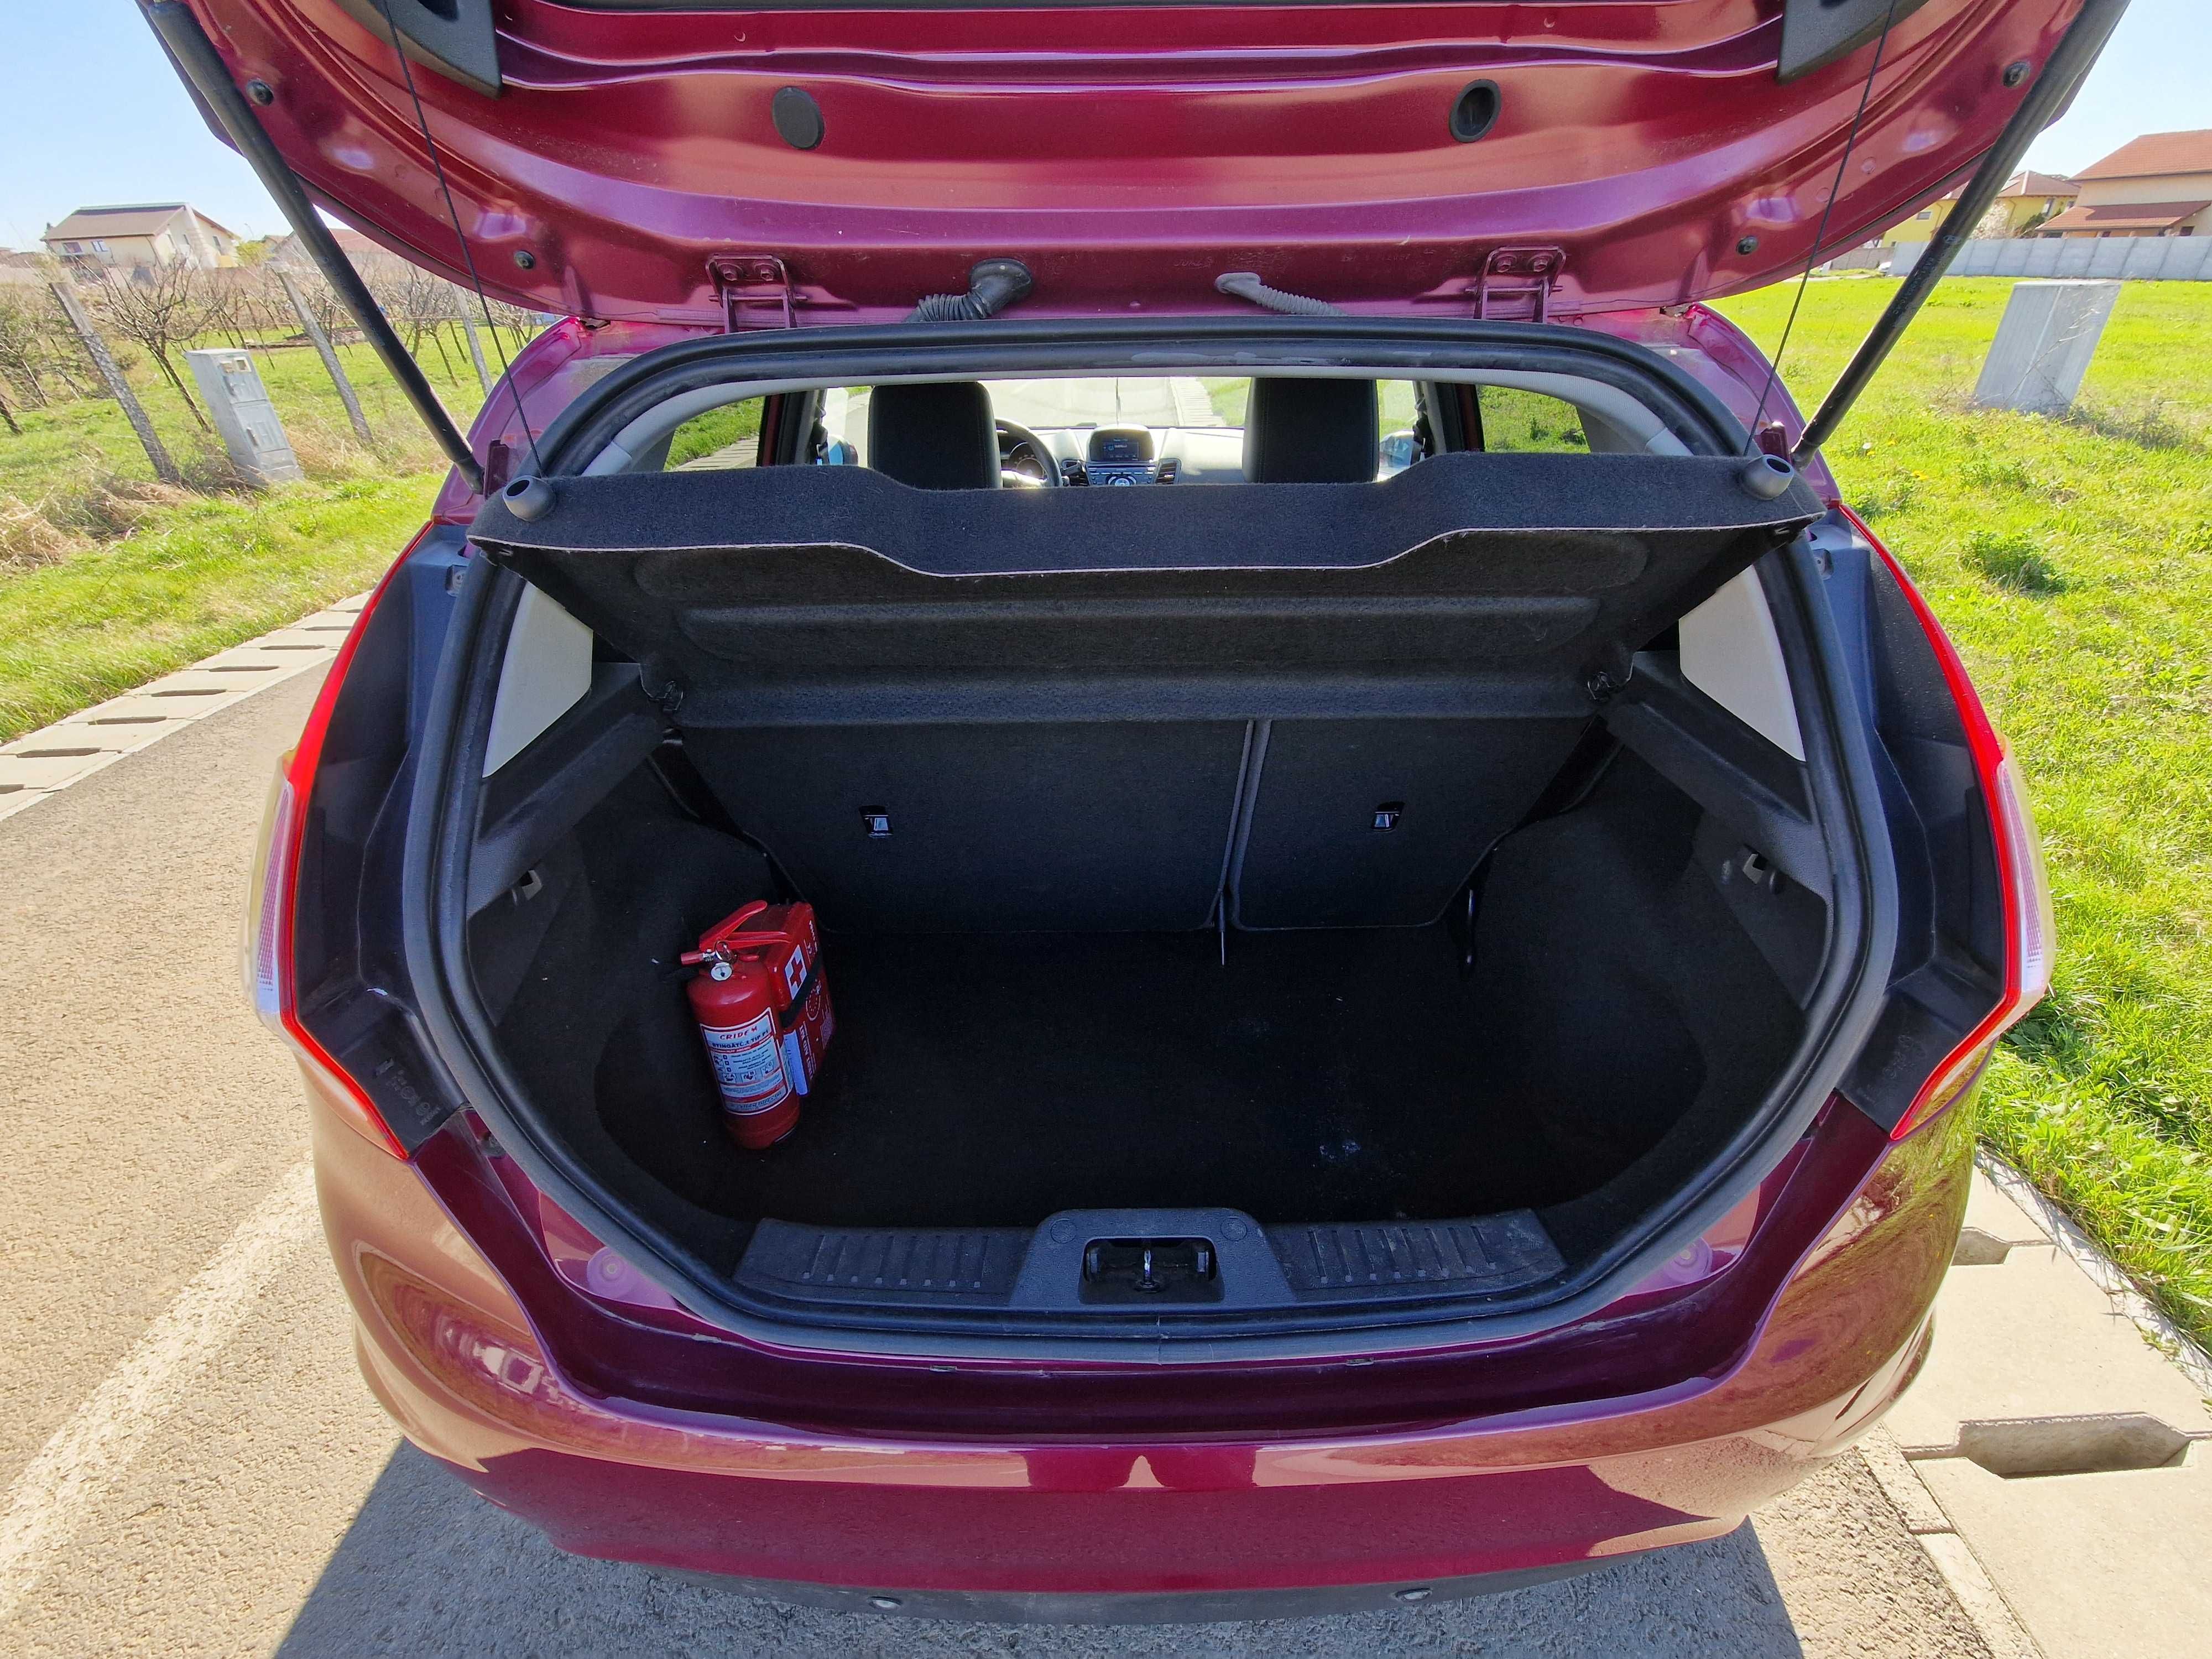 Ford Fiesta 1.0 Titanium, cutie AUTOMATA, EcoBoost 100CP